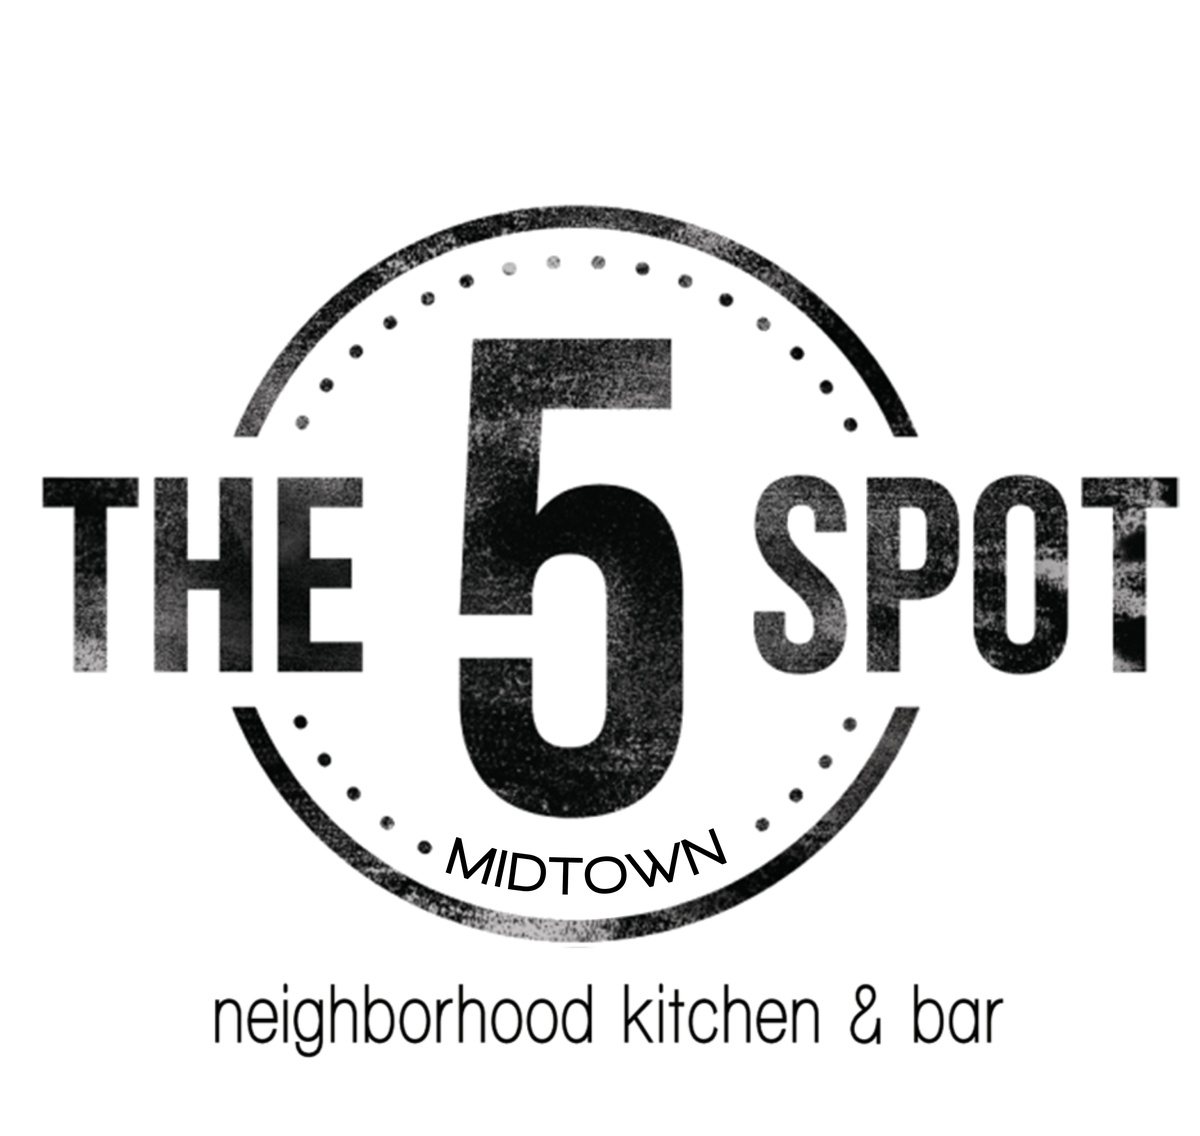 5 spot midtown logo